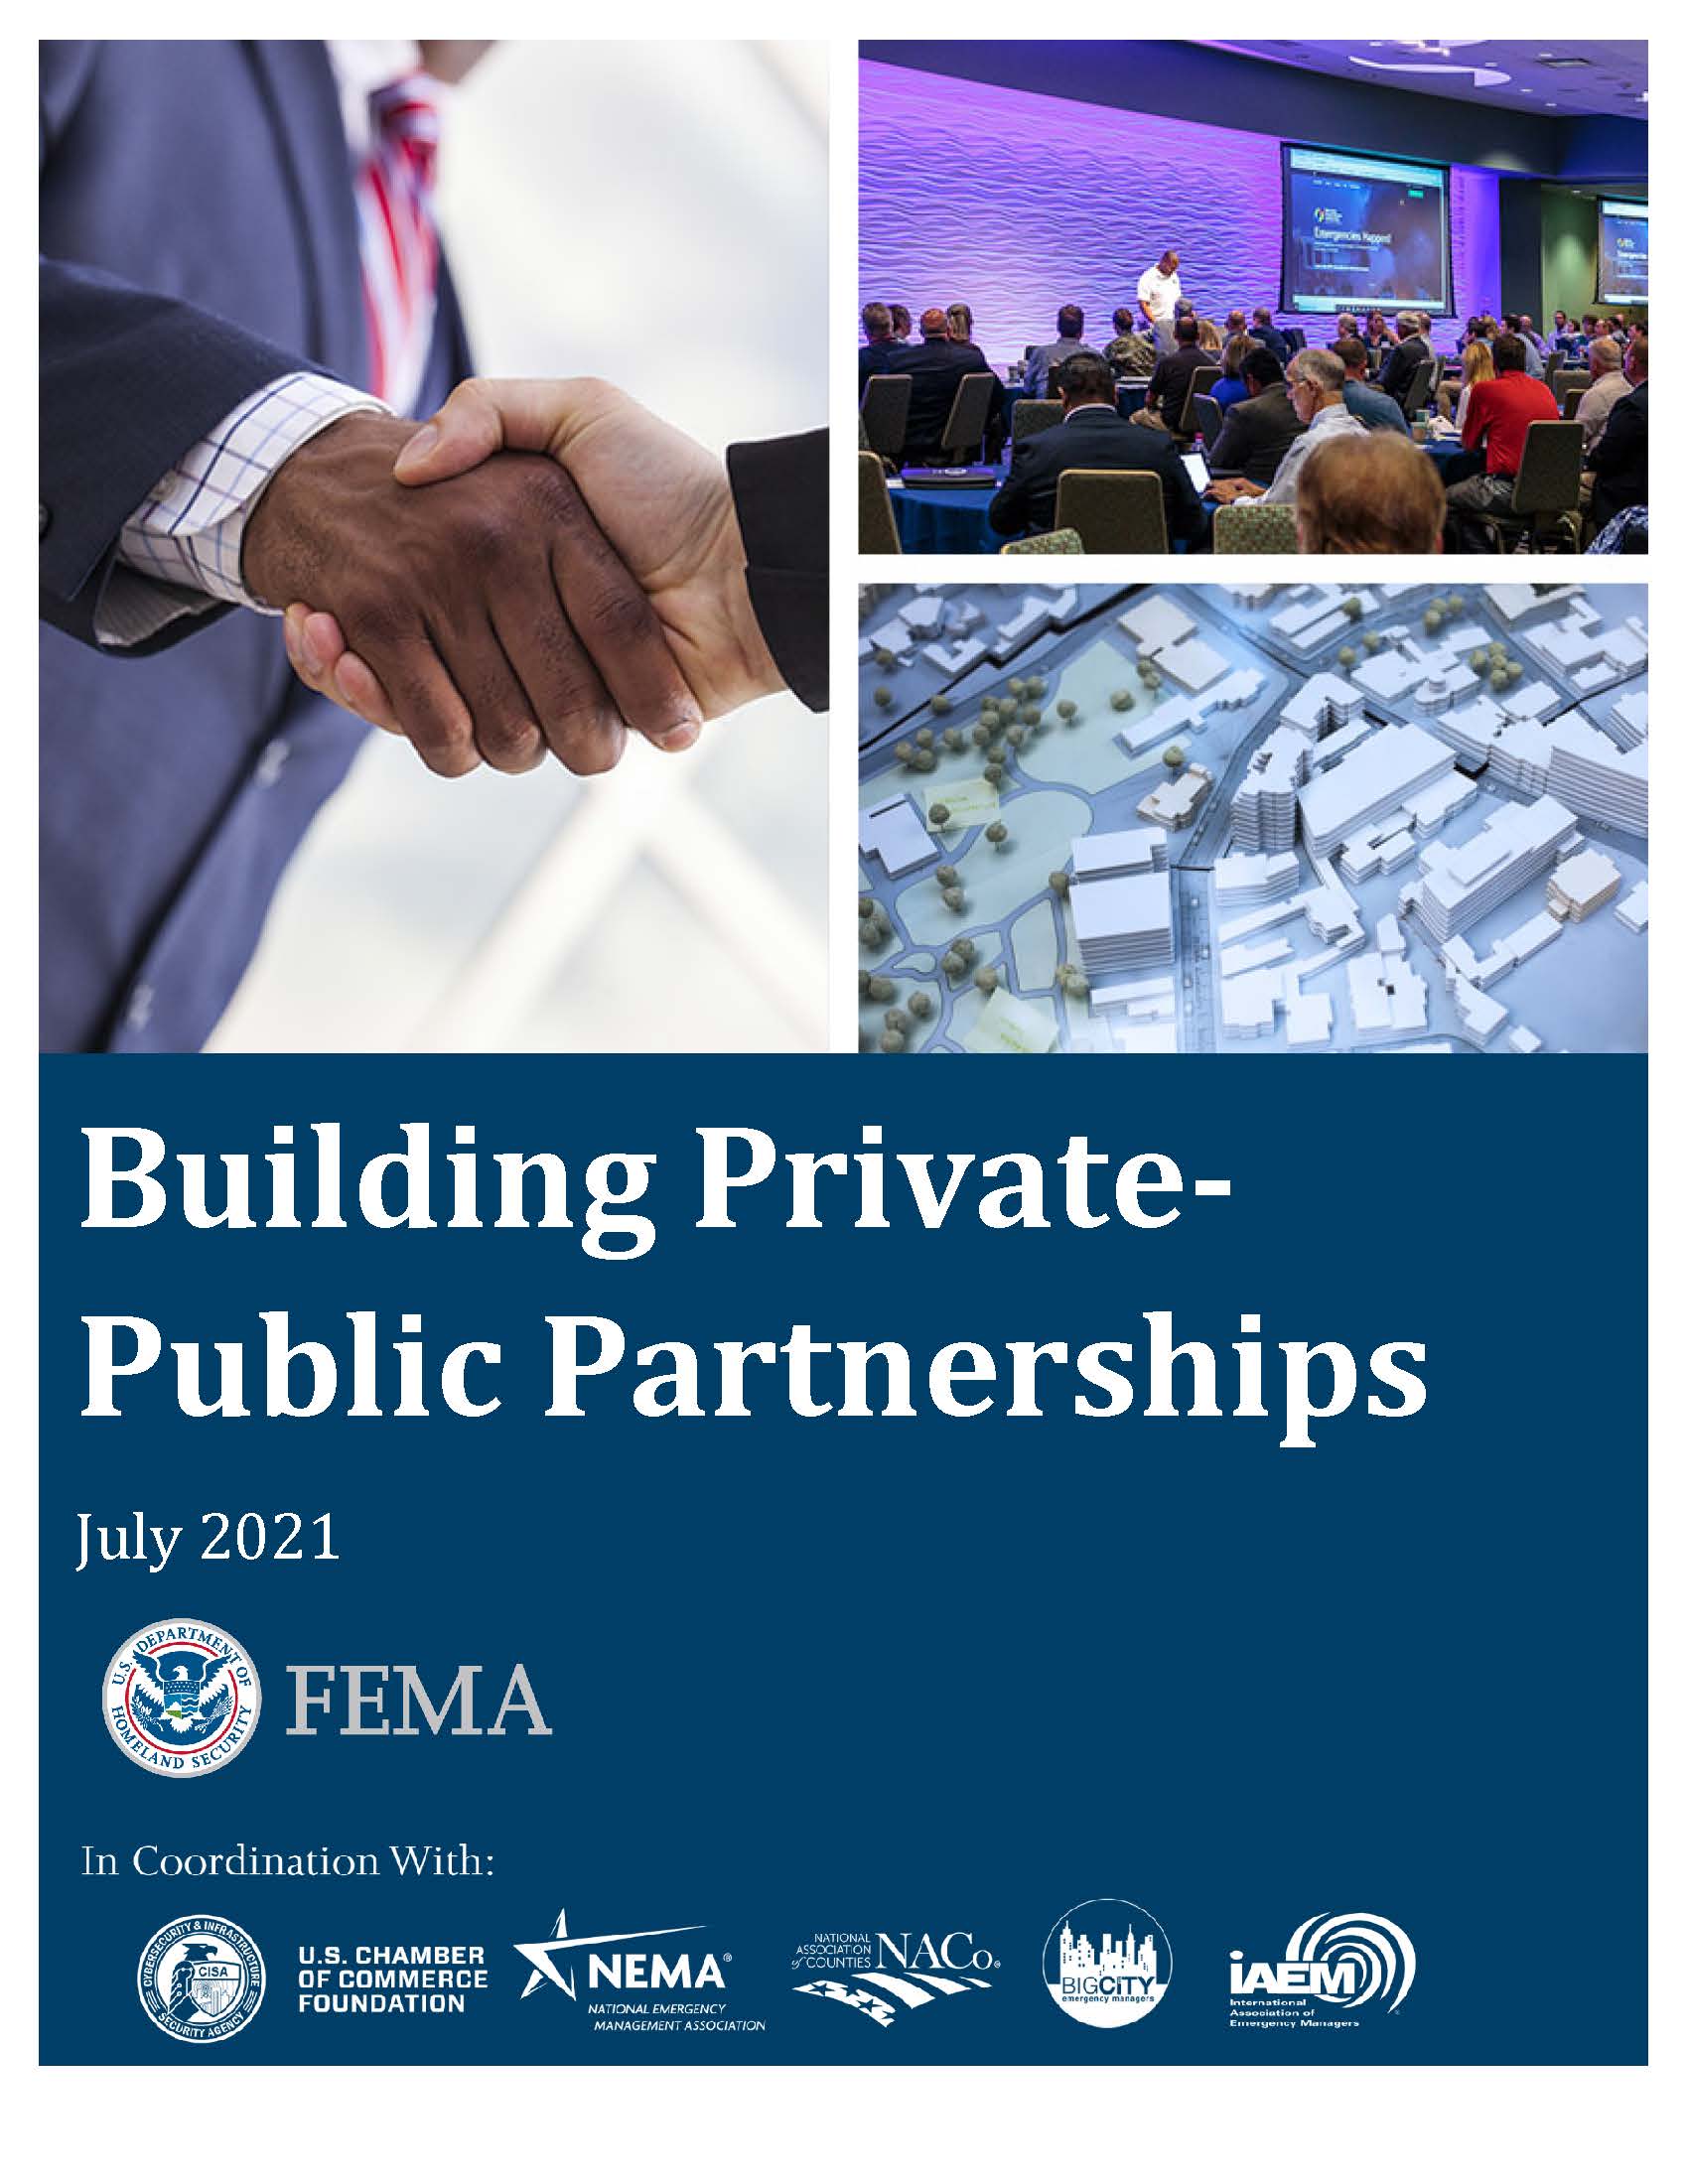 Building Private Public Partnerships Guide